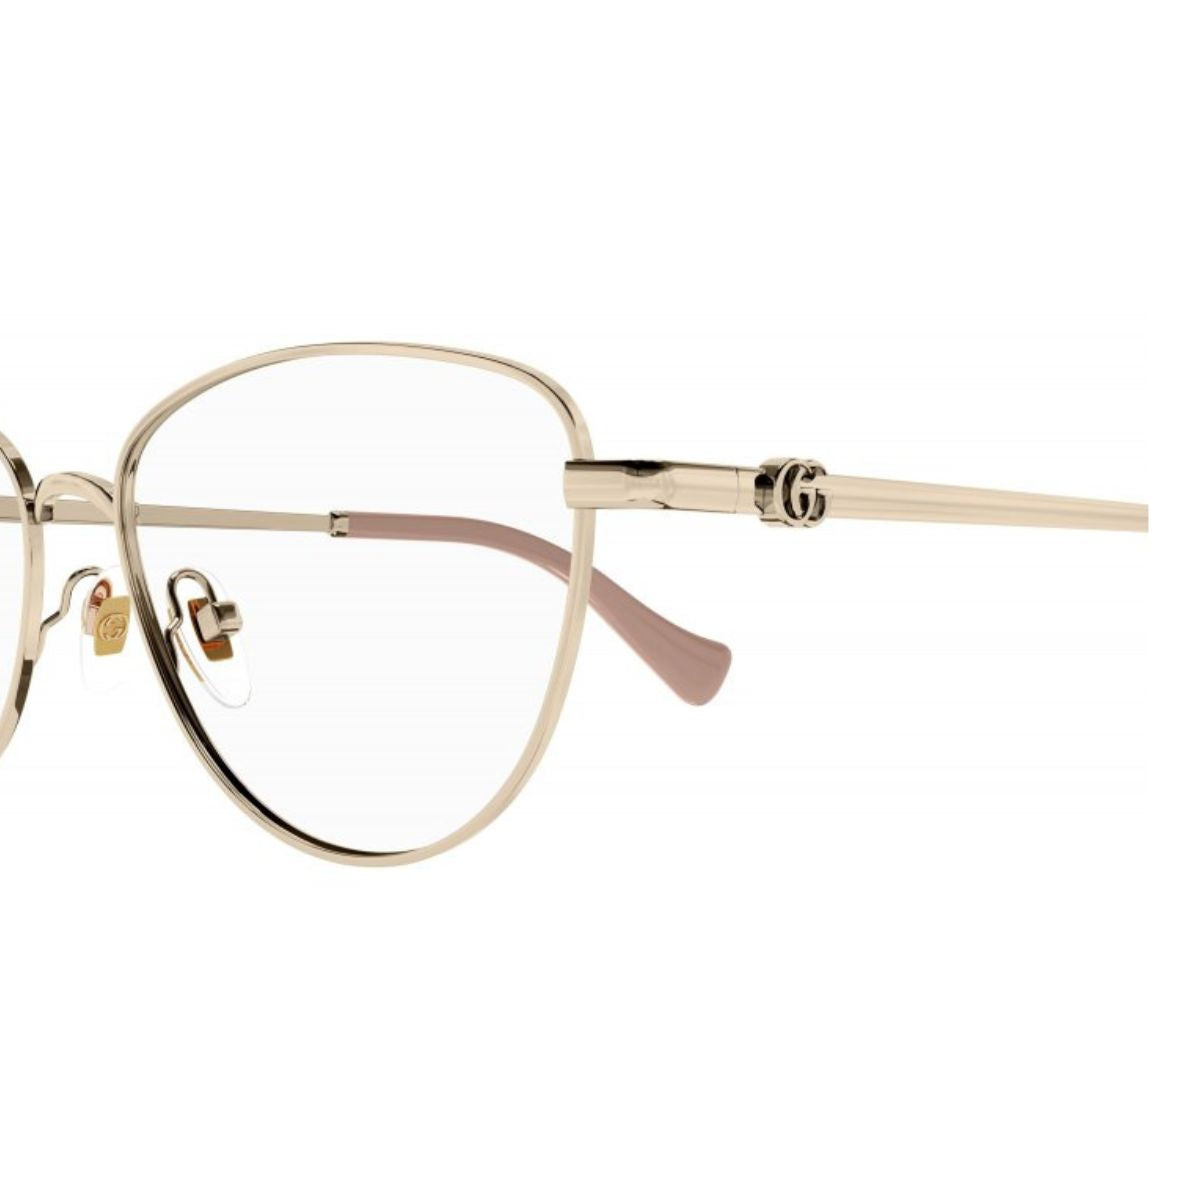 "shop Gucci GG1595O 002 prescription eyeglasses frame for women's at optorium"